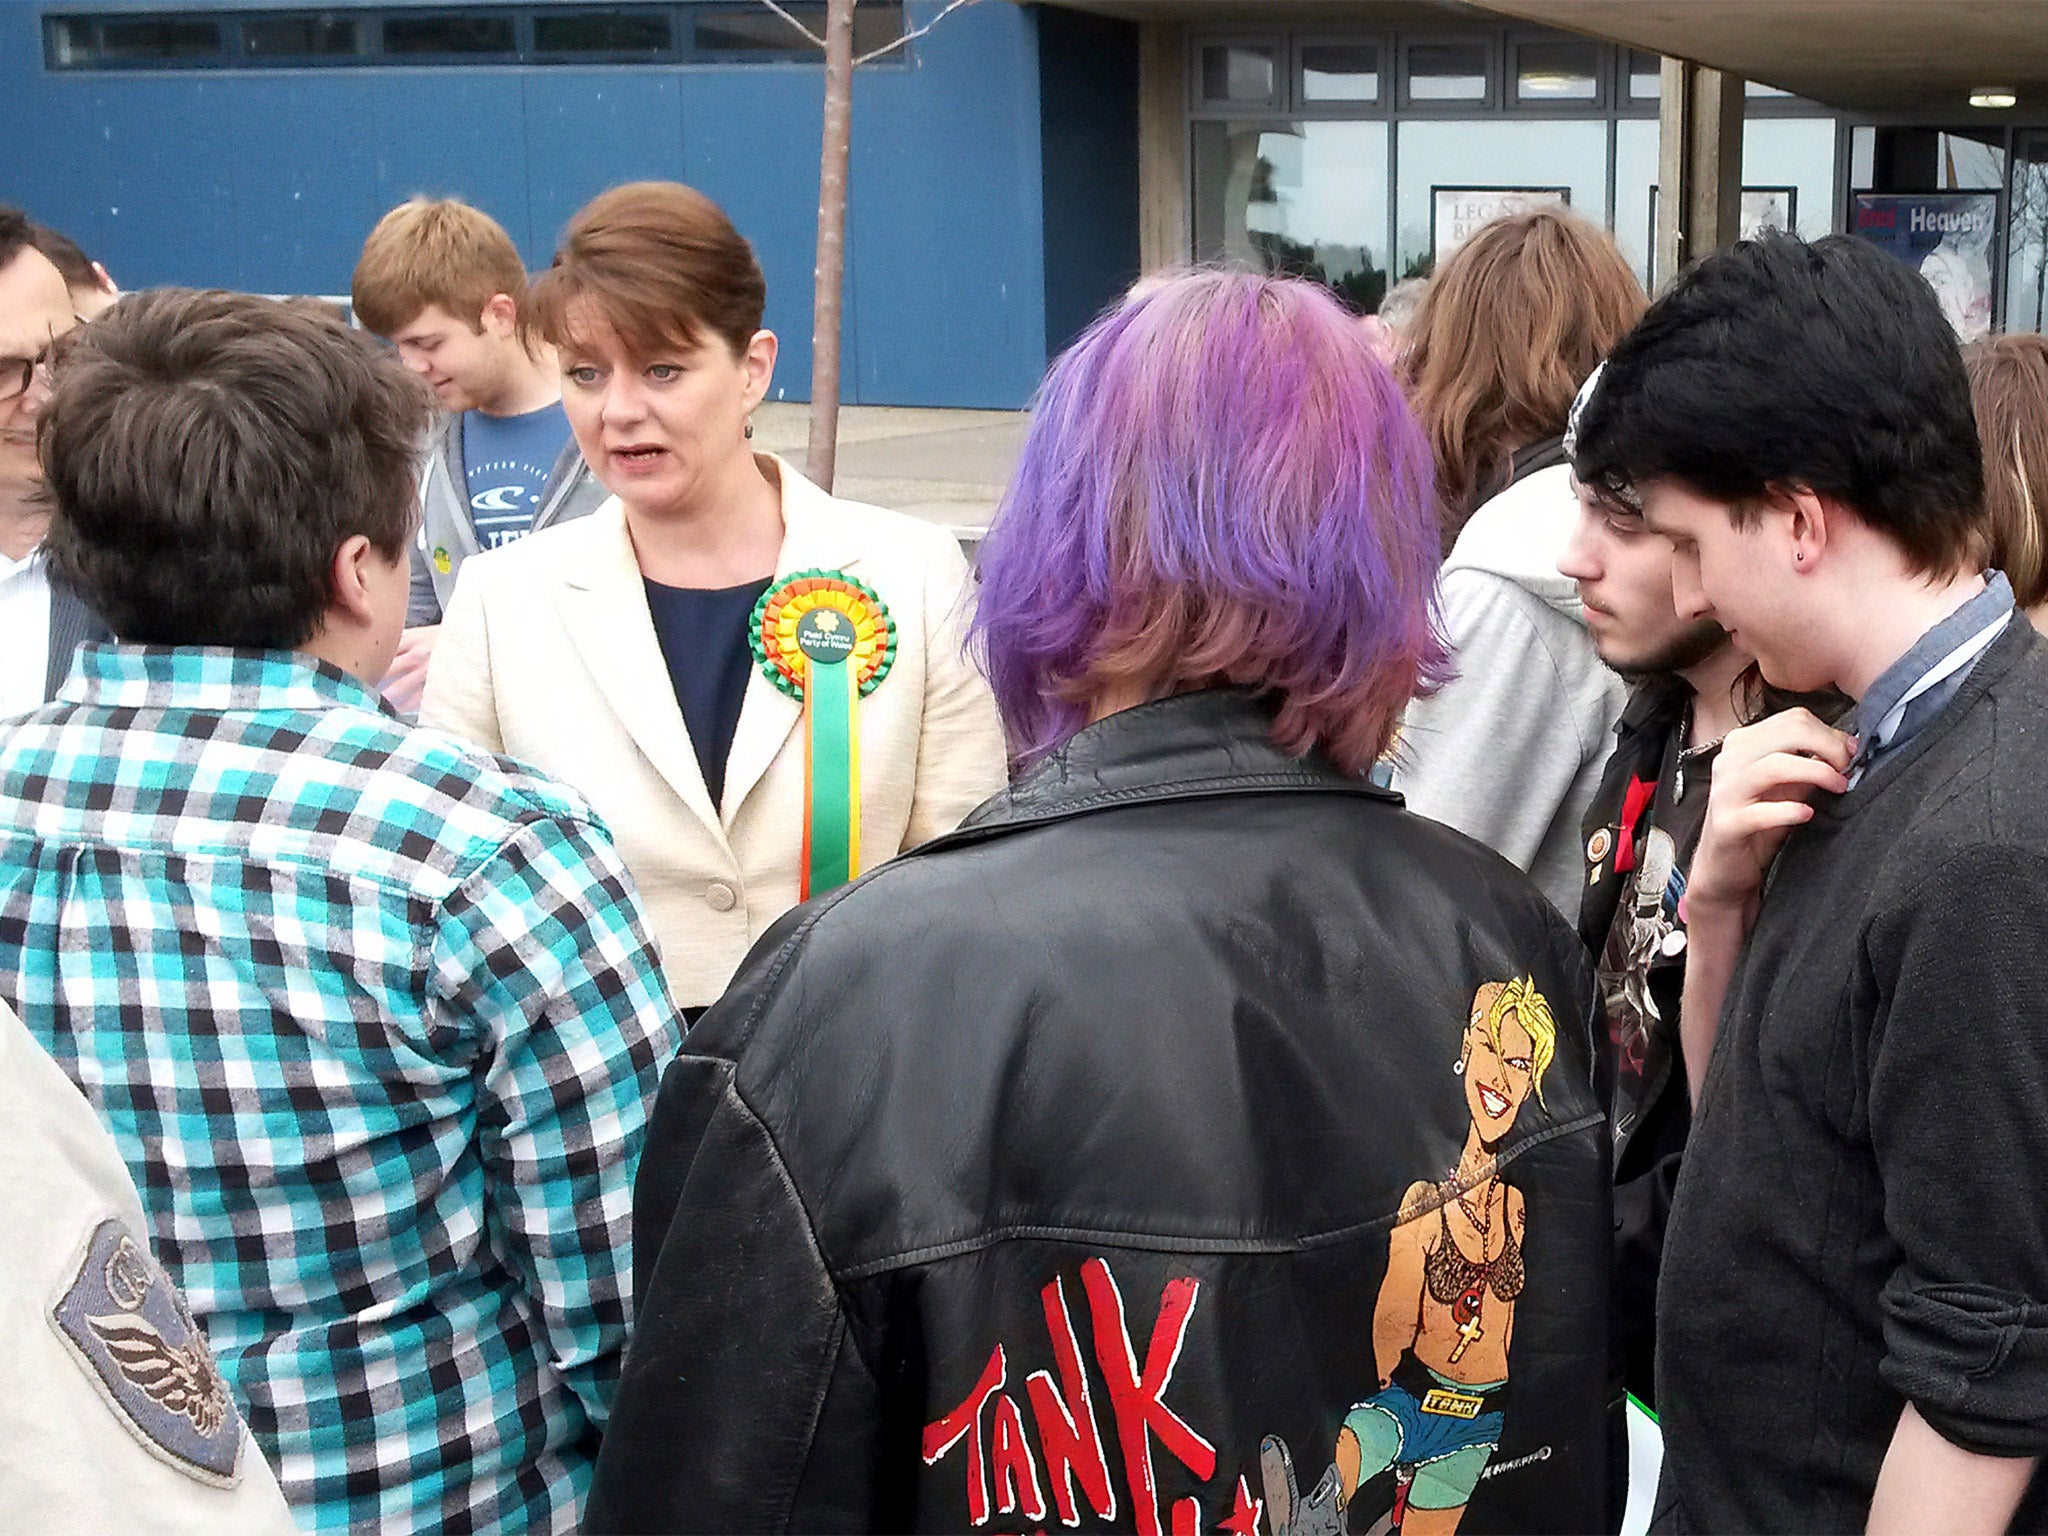 Plaid Cymru leader Leanne Wood meets students on the campaign trail